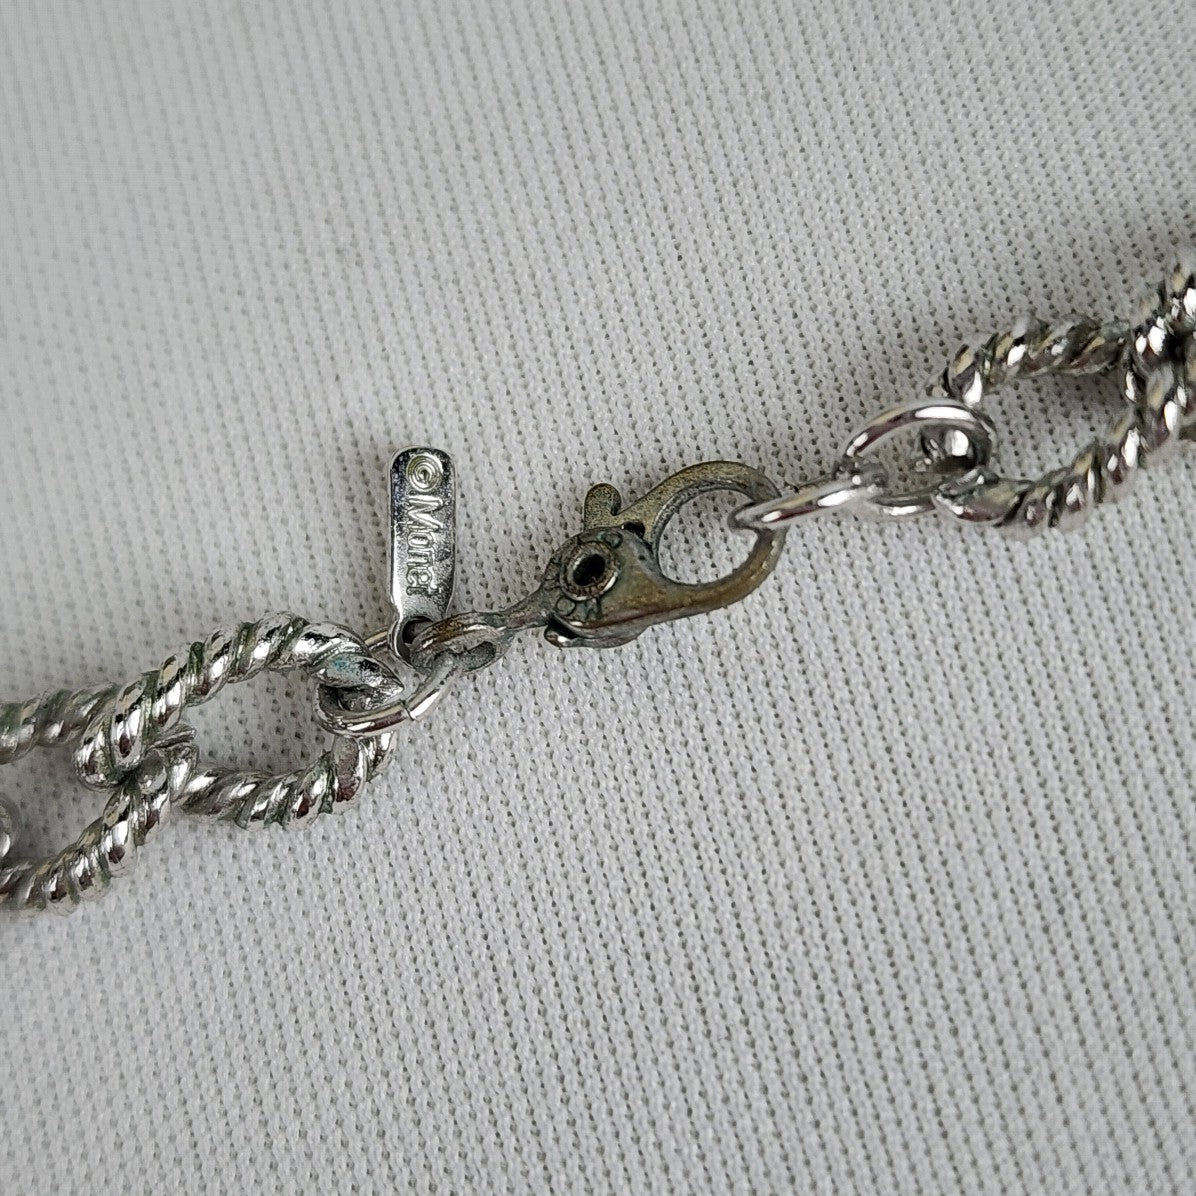 Vintage Monet Silver Tone Bib Chain Necklace